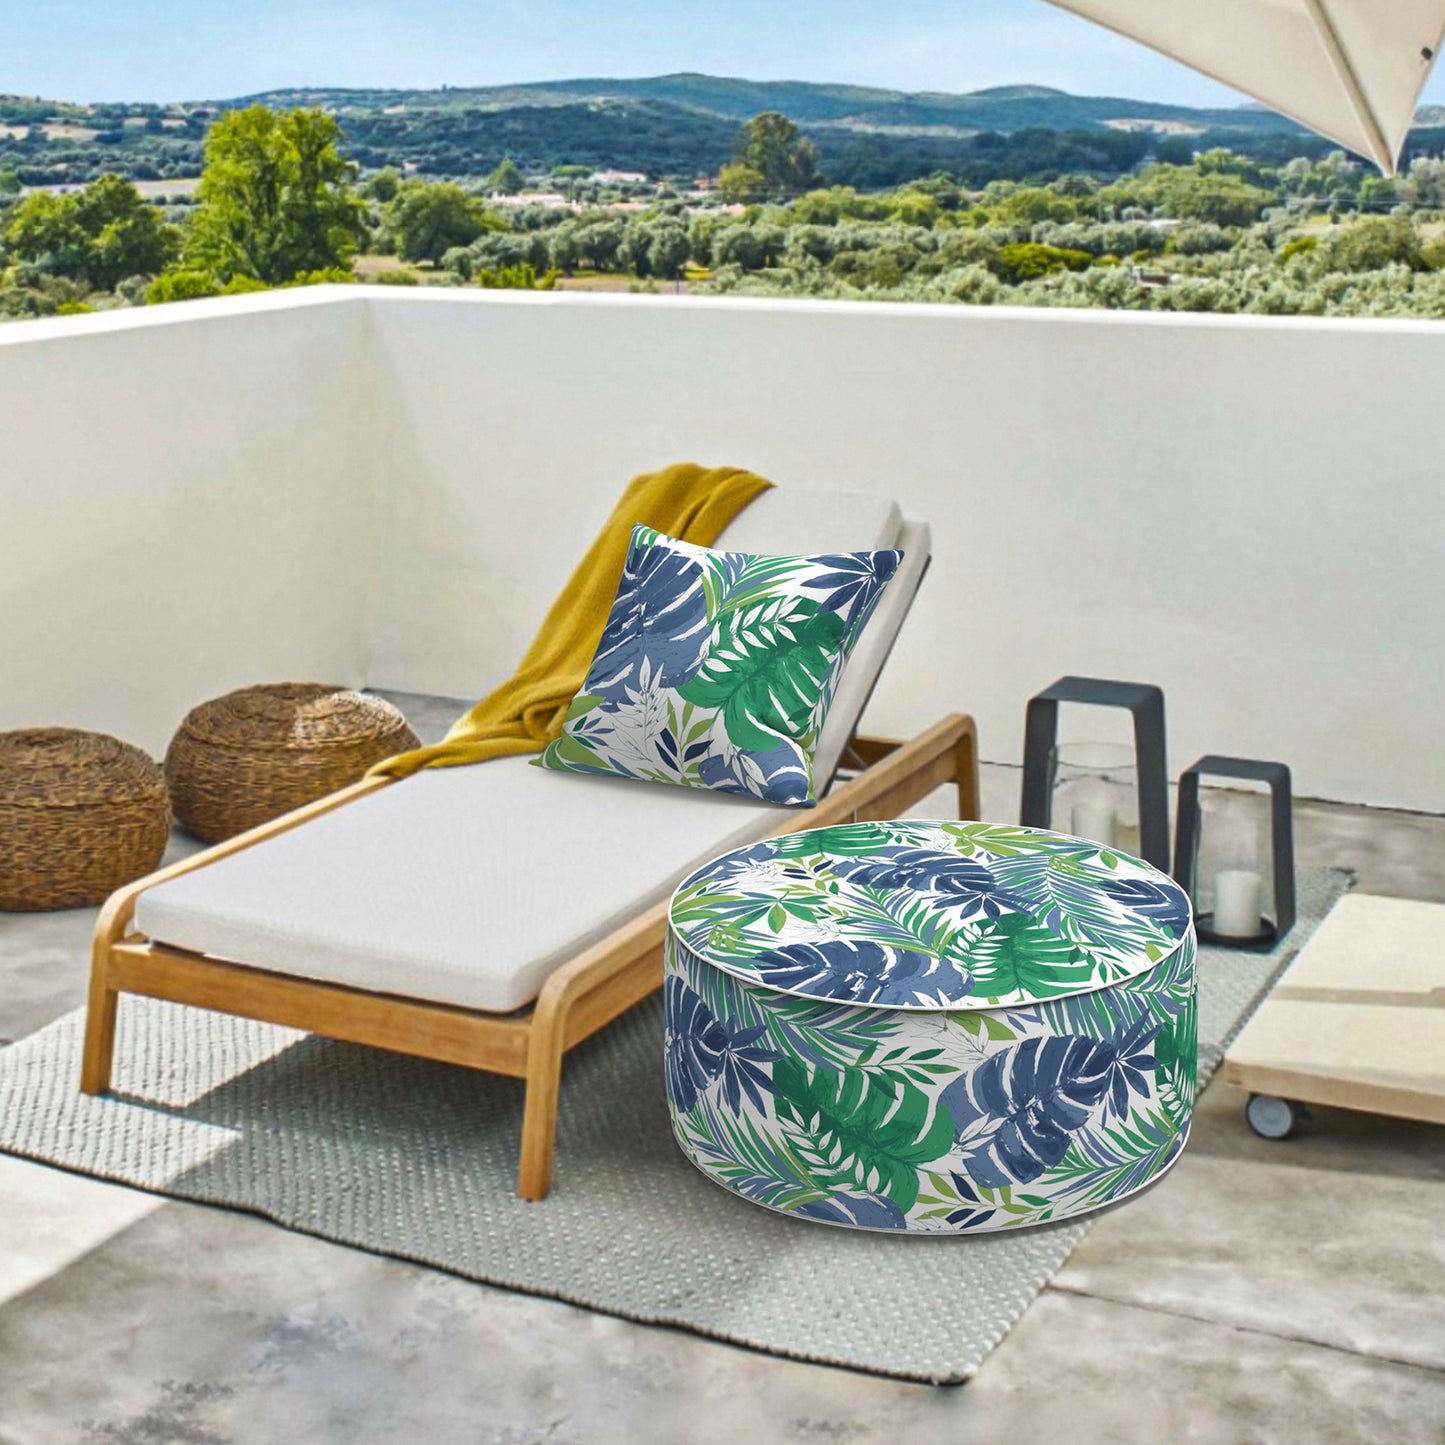 Outdoor Inflatable Stool Ottoman, All Weather Portable Footrest Stool, Furniture Stool Ottomans for Home Garden Beach, D31”xH14”, Islamorada Blue Green